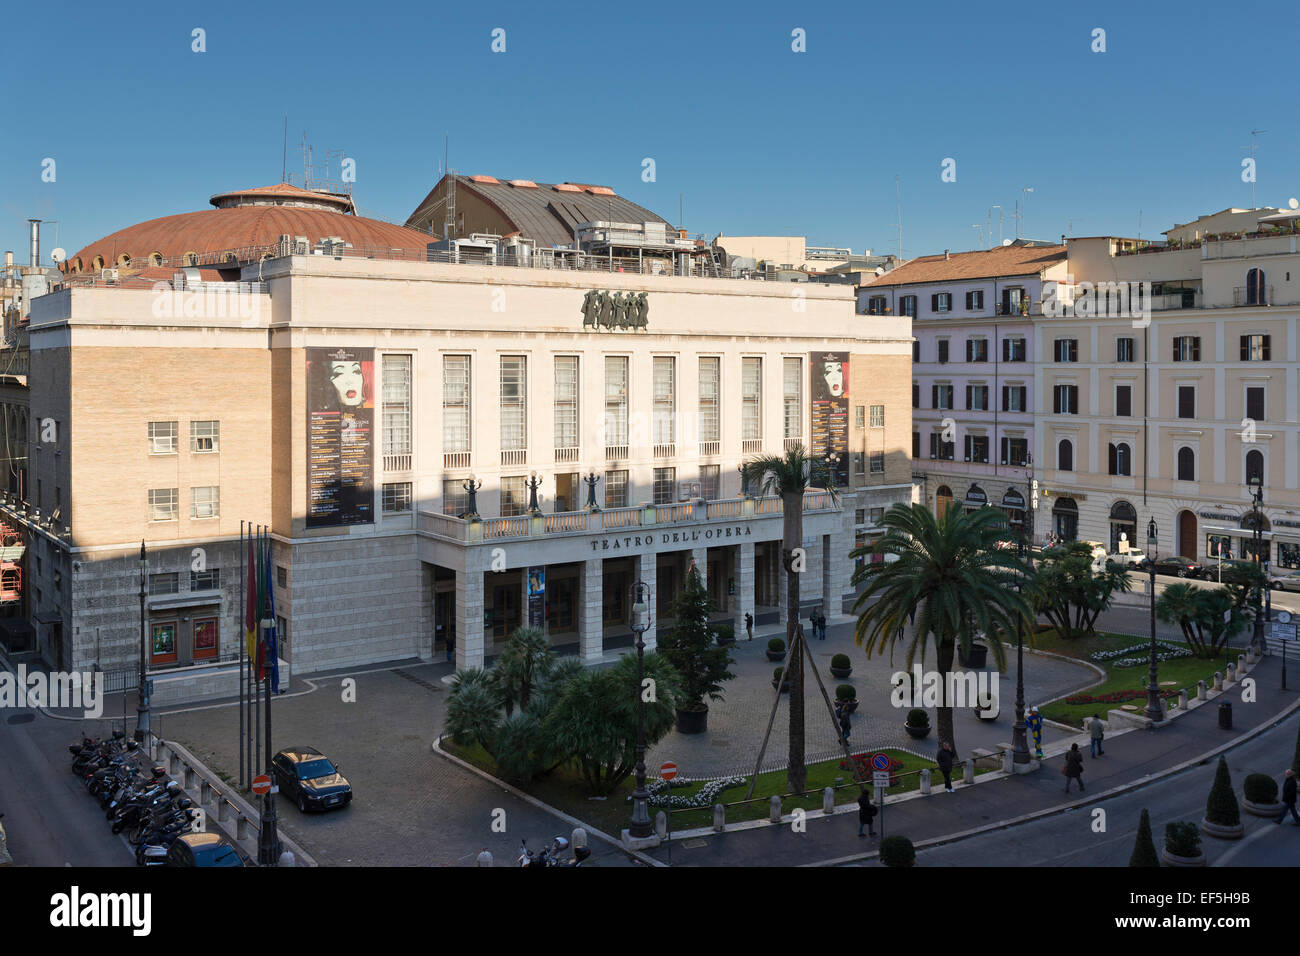 Teatro dell'Opera Rome Italy Stock Photo - Alamy